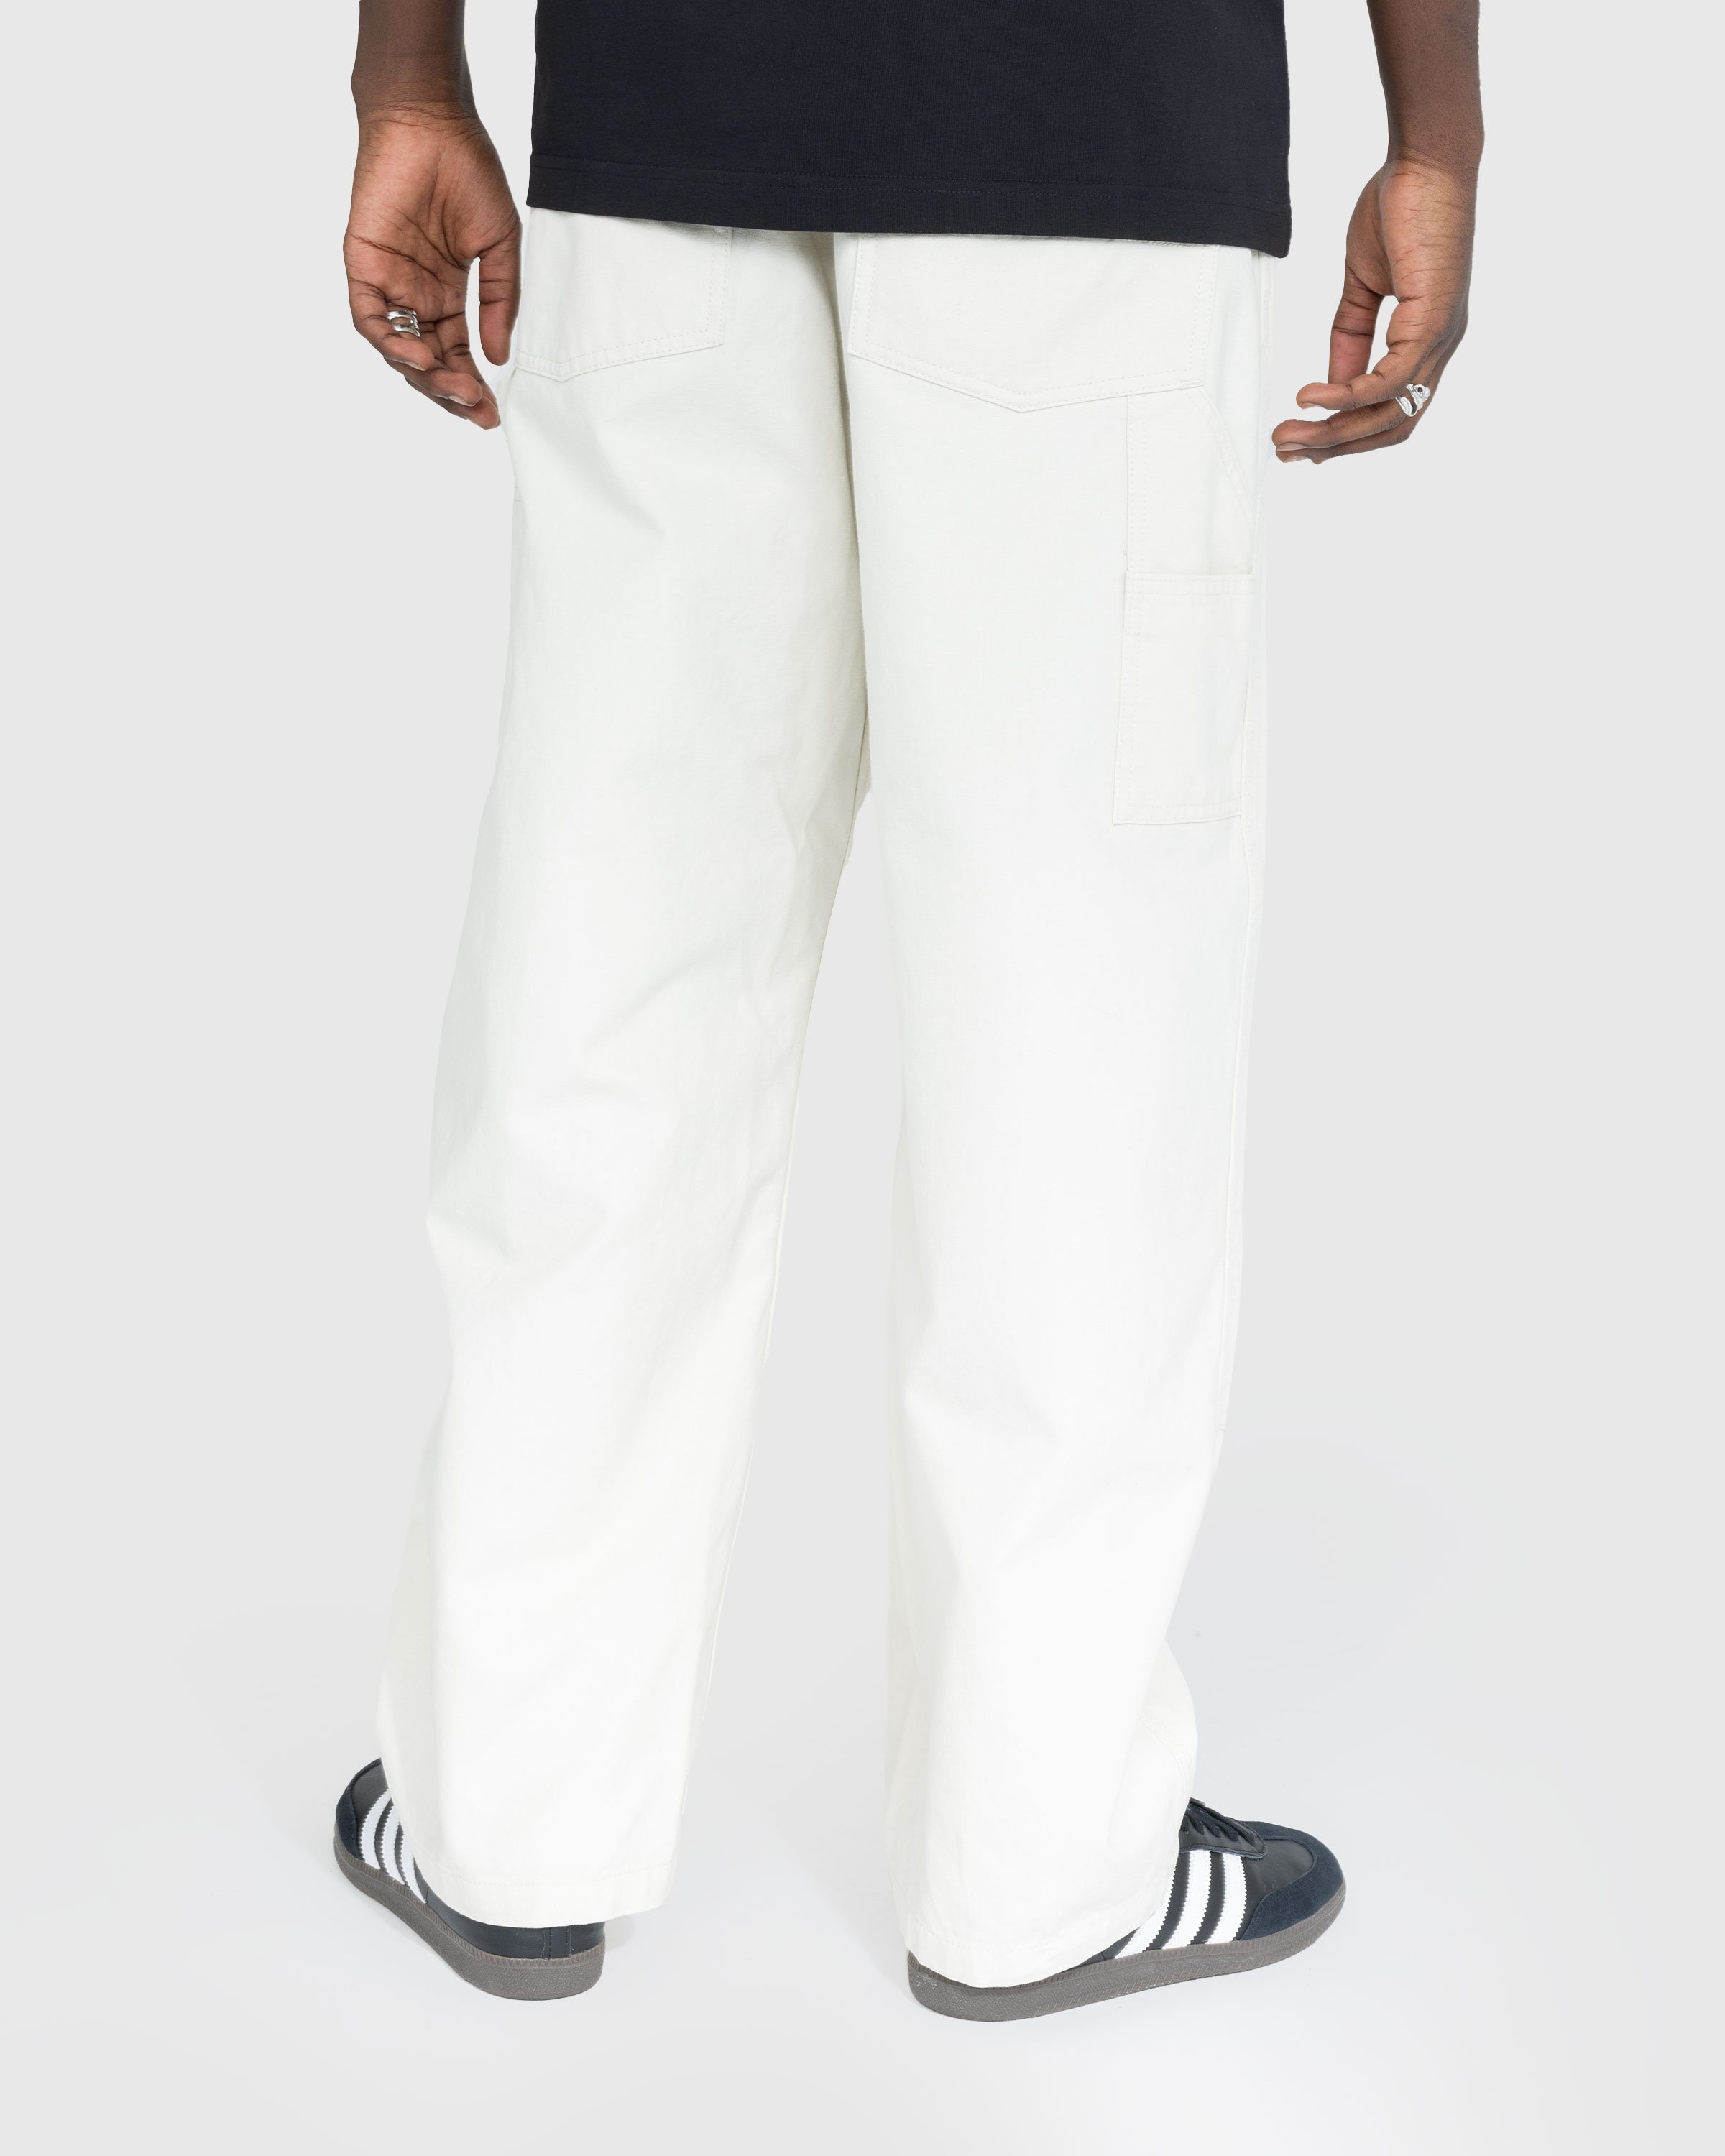 Carhartt WIP - Wide Panel Pant Salt/Rinsed - Clothing - White - Image 3